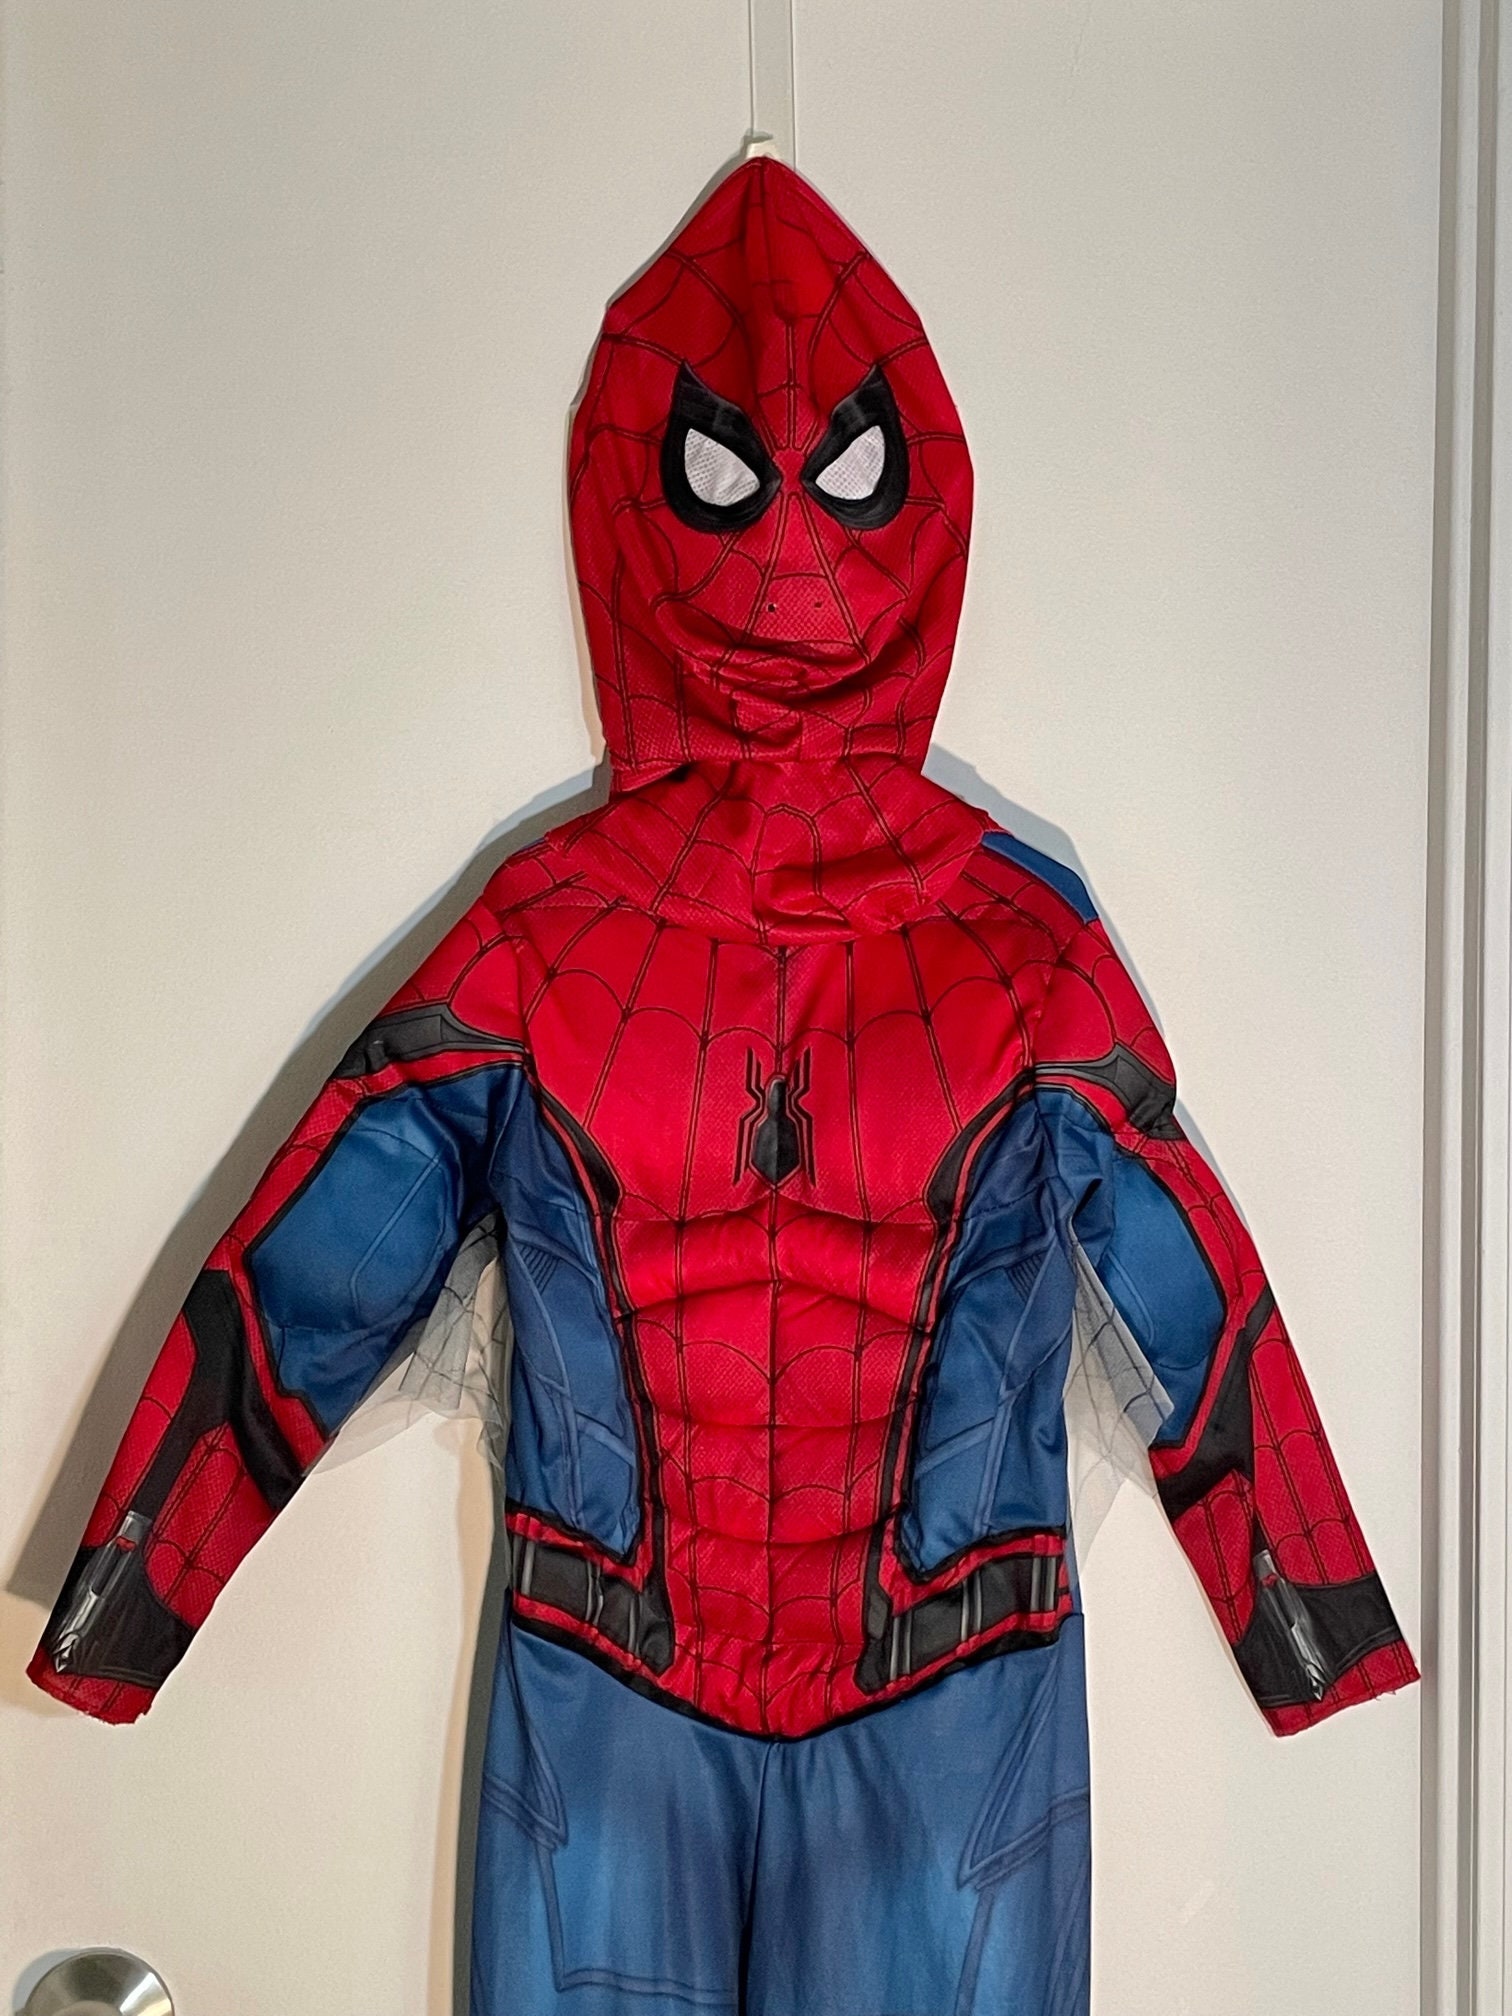 Spider-Man Child Costume - Jumpsuits & Mask Size Medium 8-10